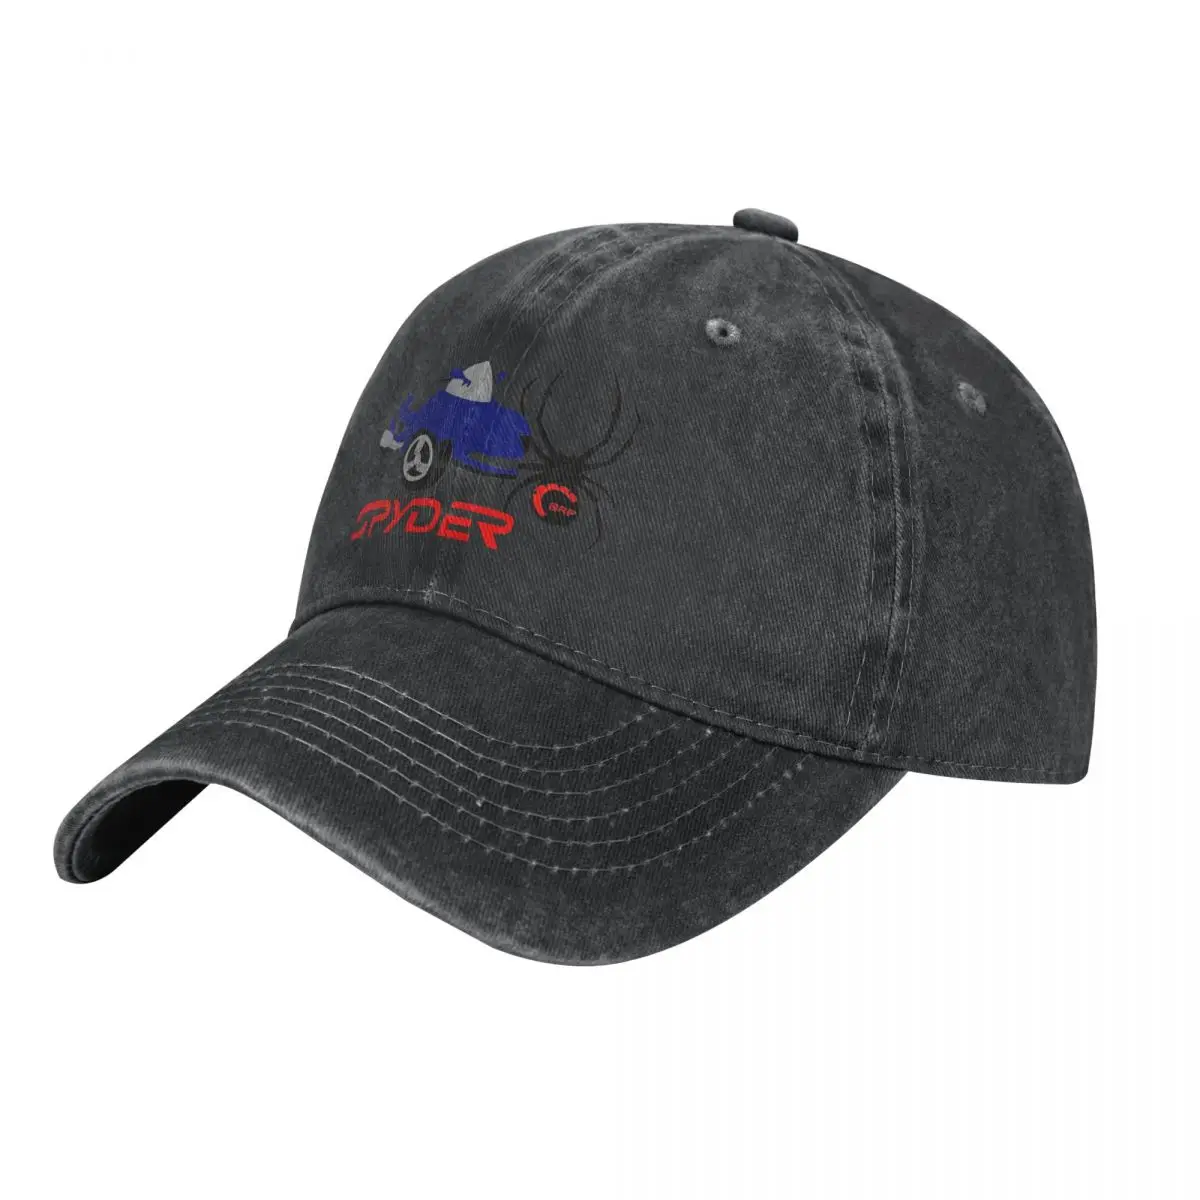 

Summer Cap Sun Visor Popular Brand Products Hip Hop Caps BRP Can Am Spyder Cowboy Hat Peaked Hats